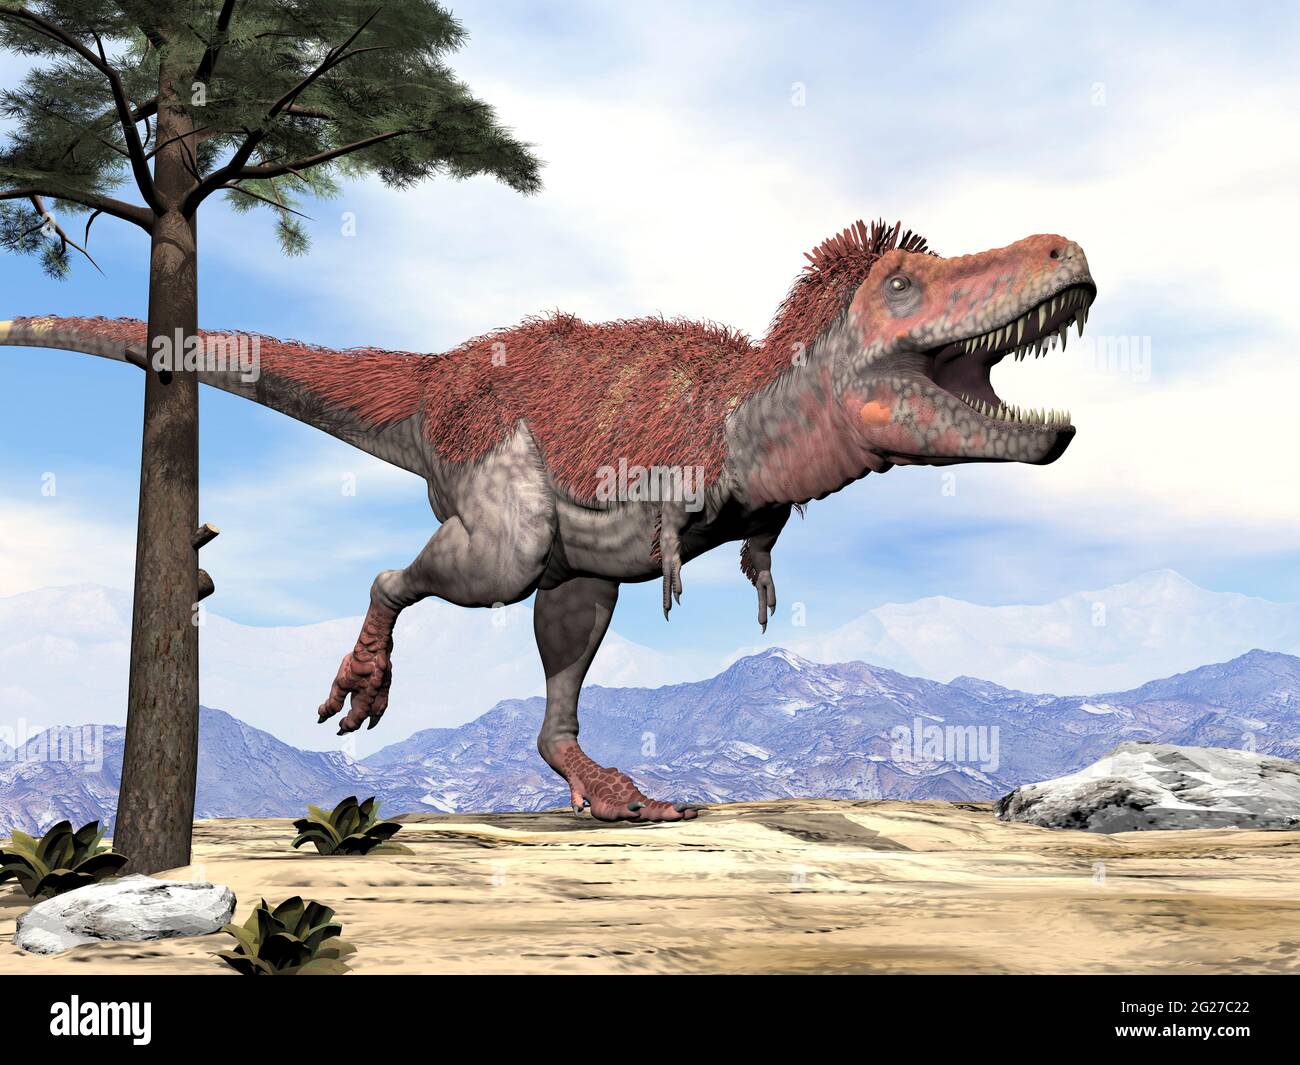 Tarbosaurus dinosaur roaring. Stock Photo